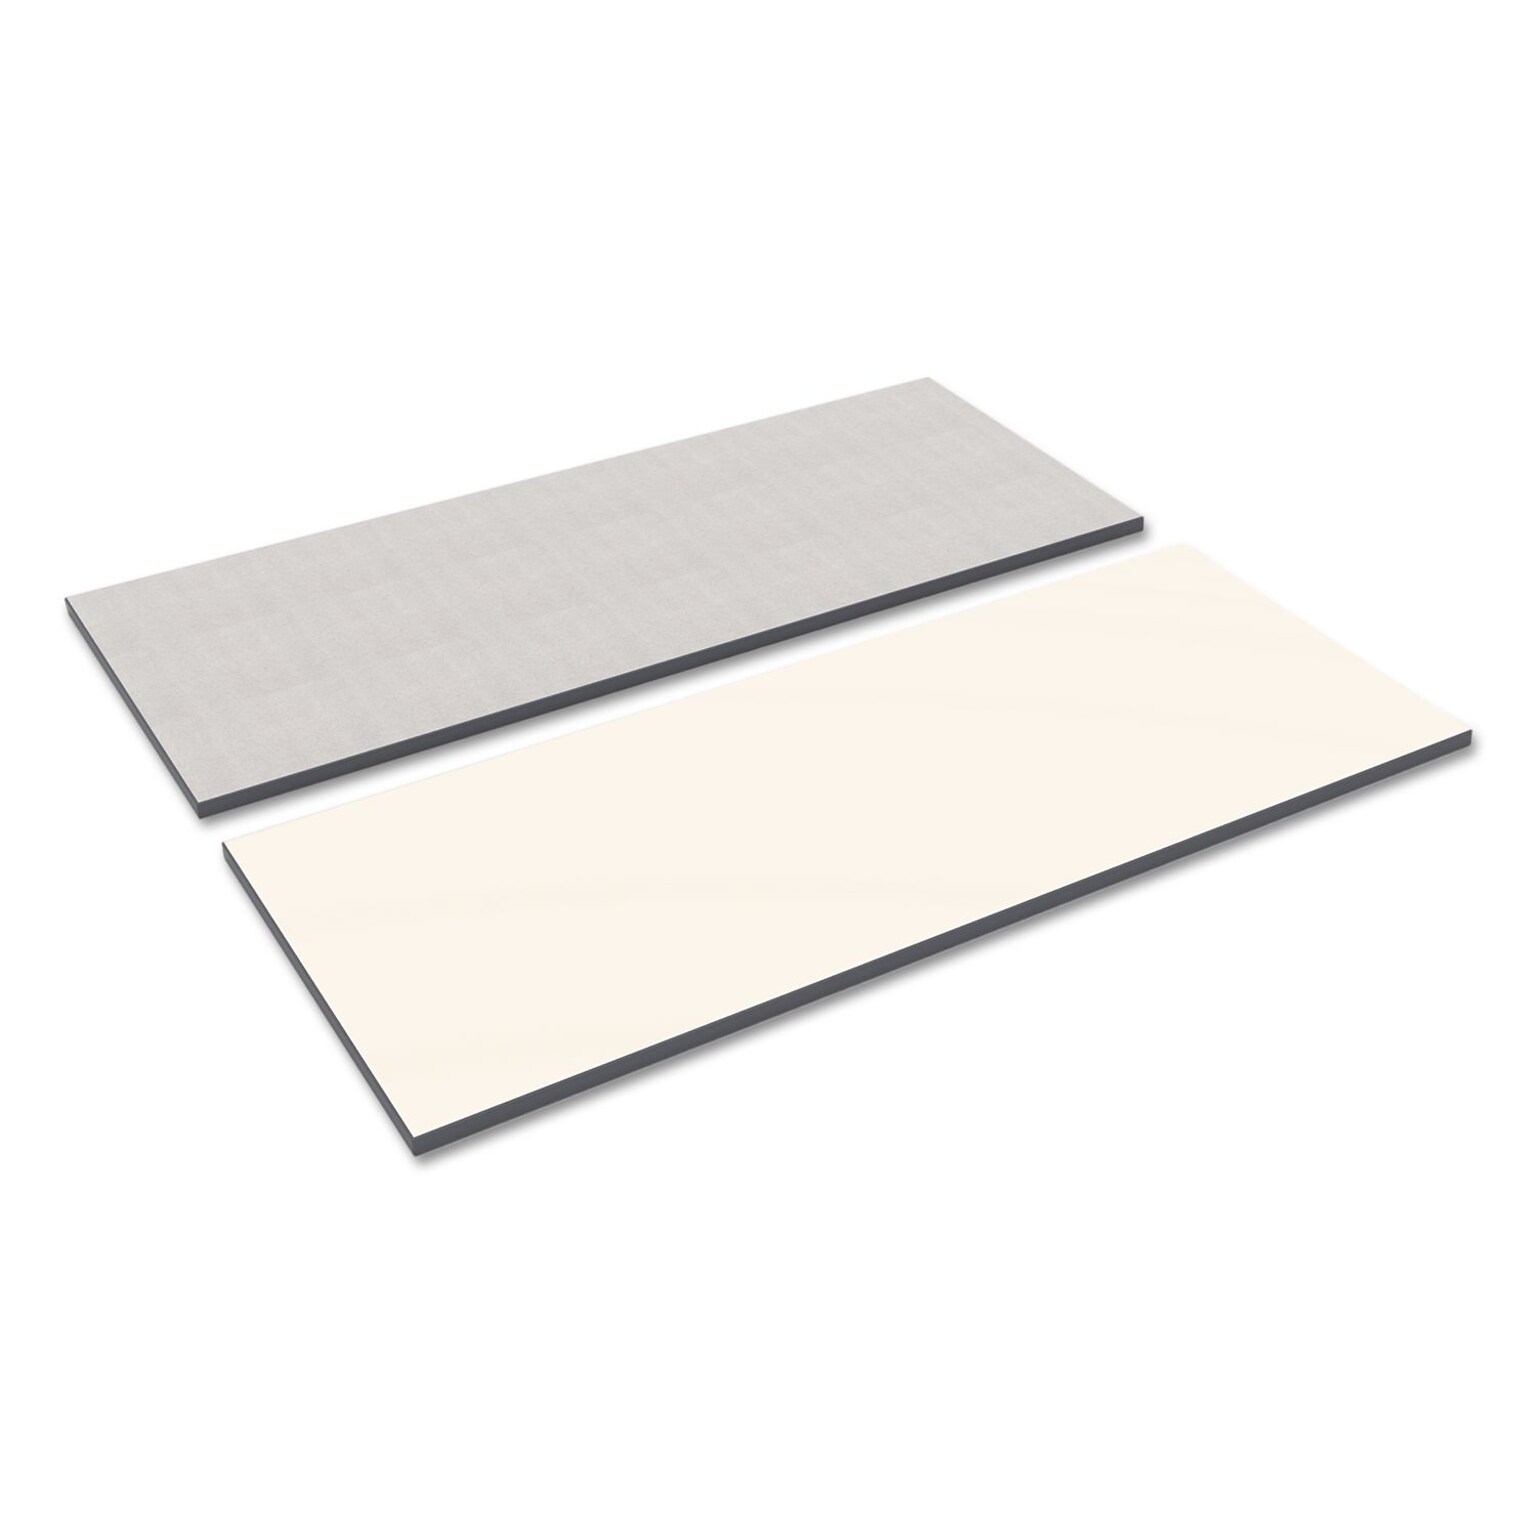 Alera® Reversible Laminate Table Top, Rectangular, 60w x 24d, White/Gray